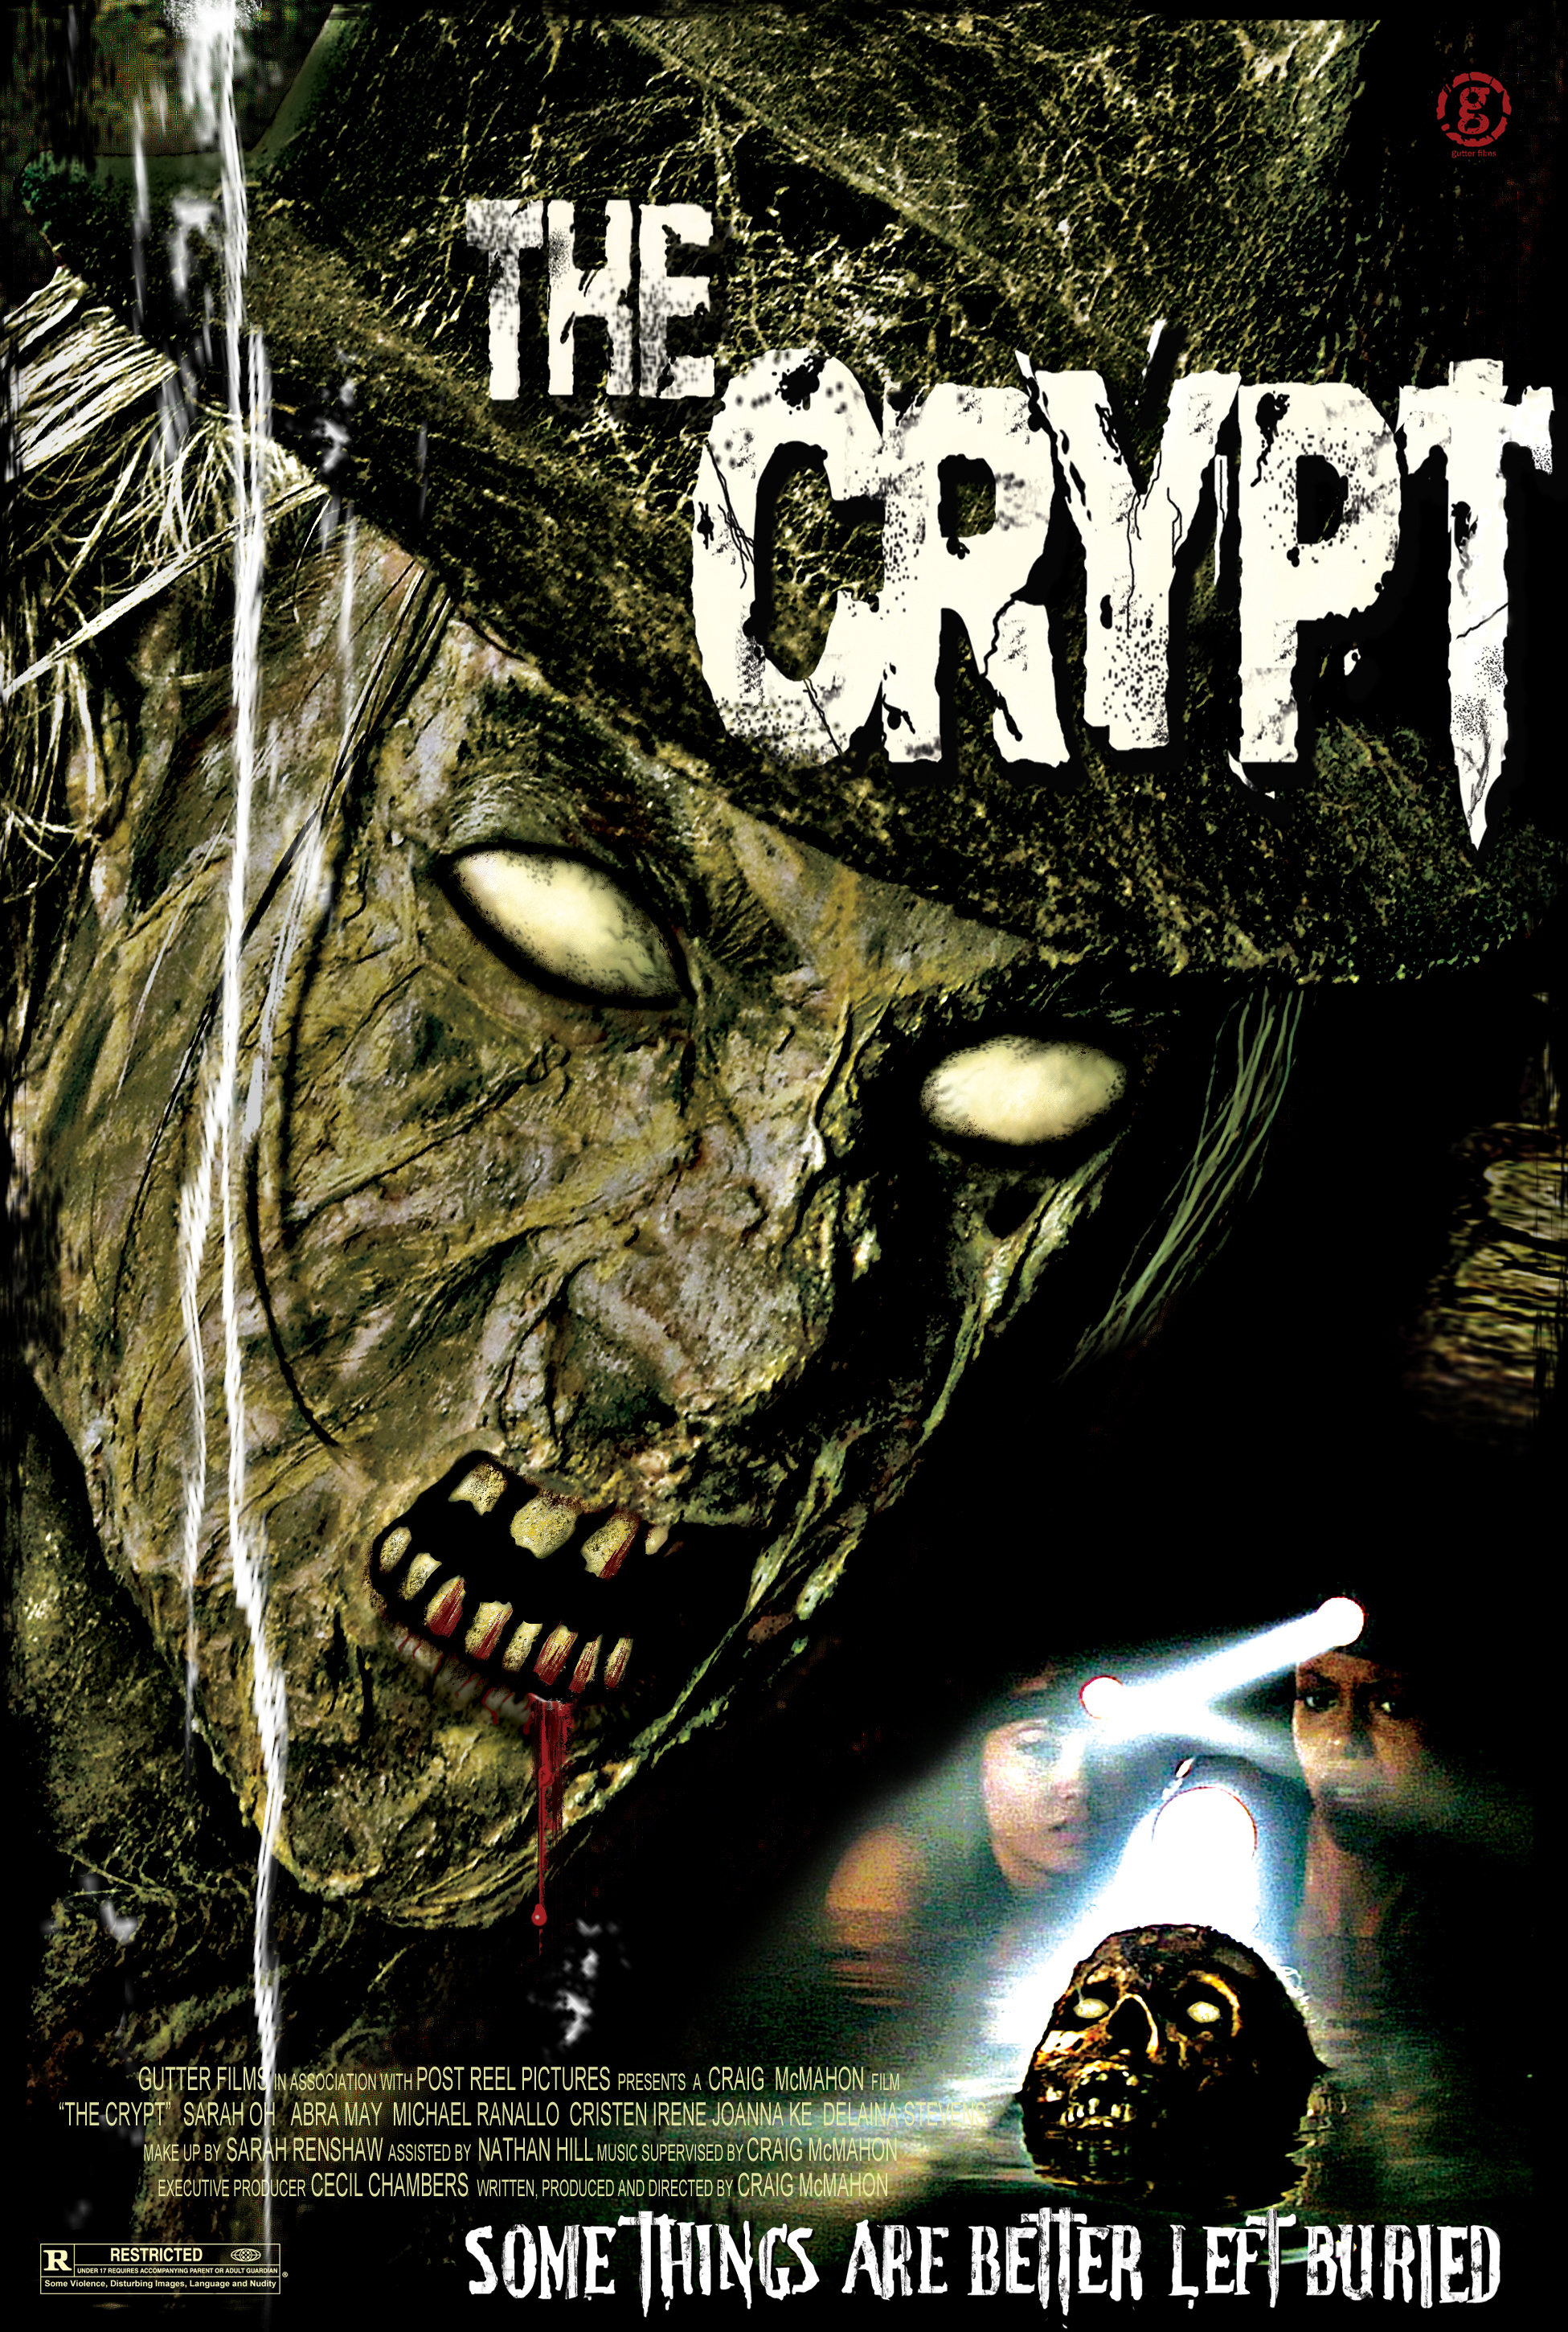 The Crypt (2009) Screenshot 1 